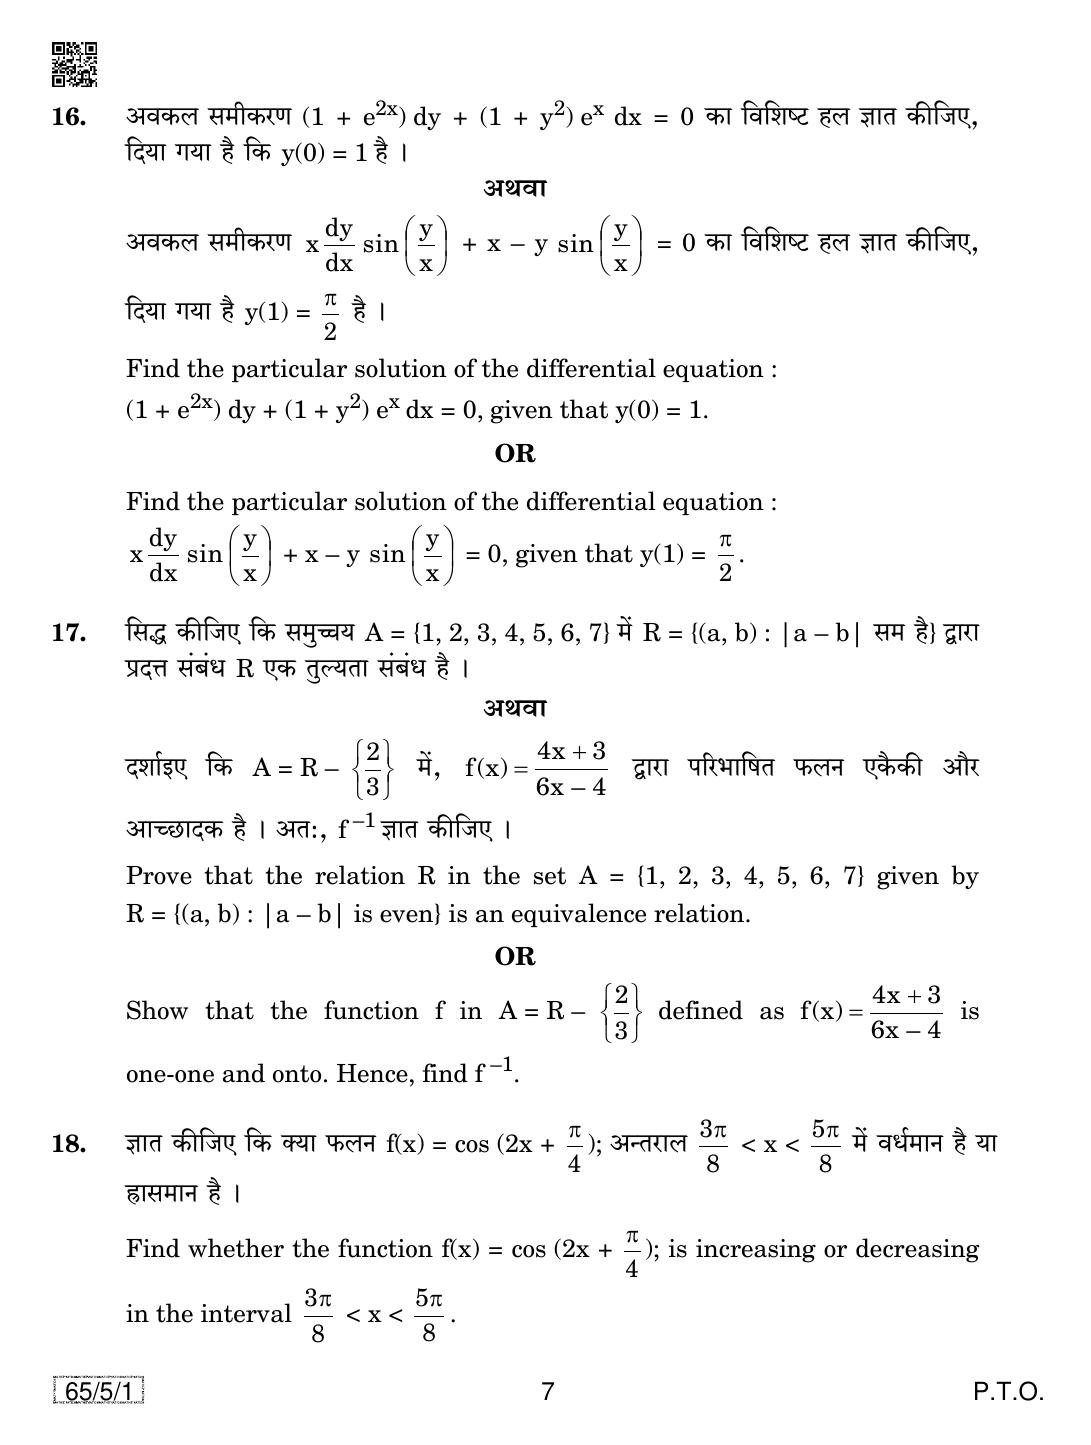 CBSE Class 12 65-5-1 Mathematics 2019 Question Paper - Page 7